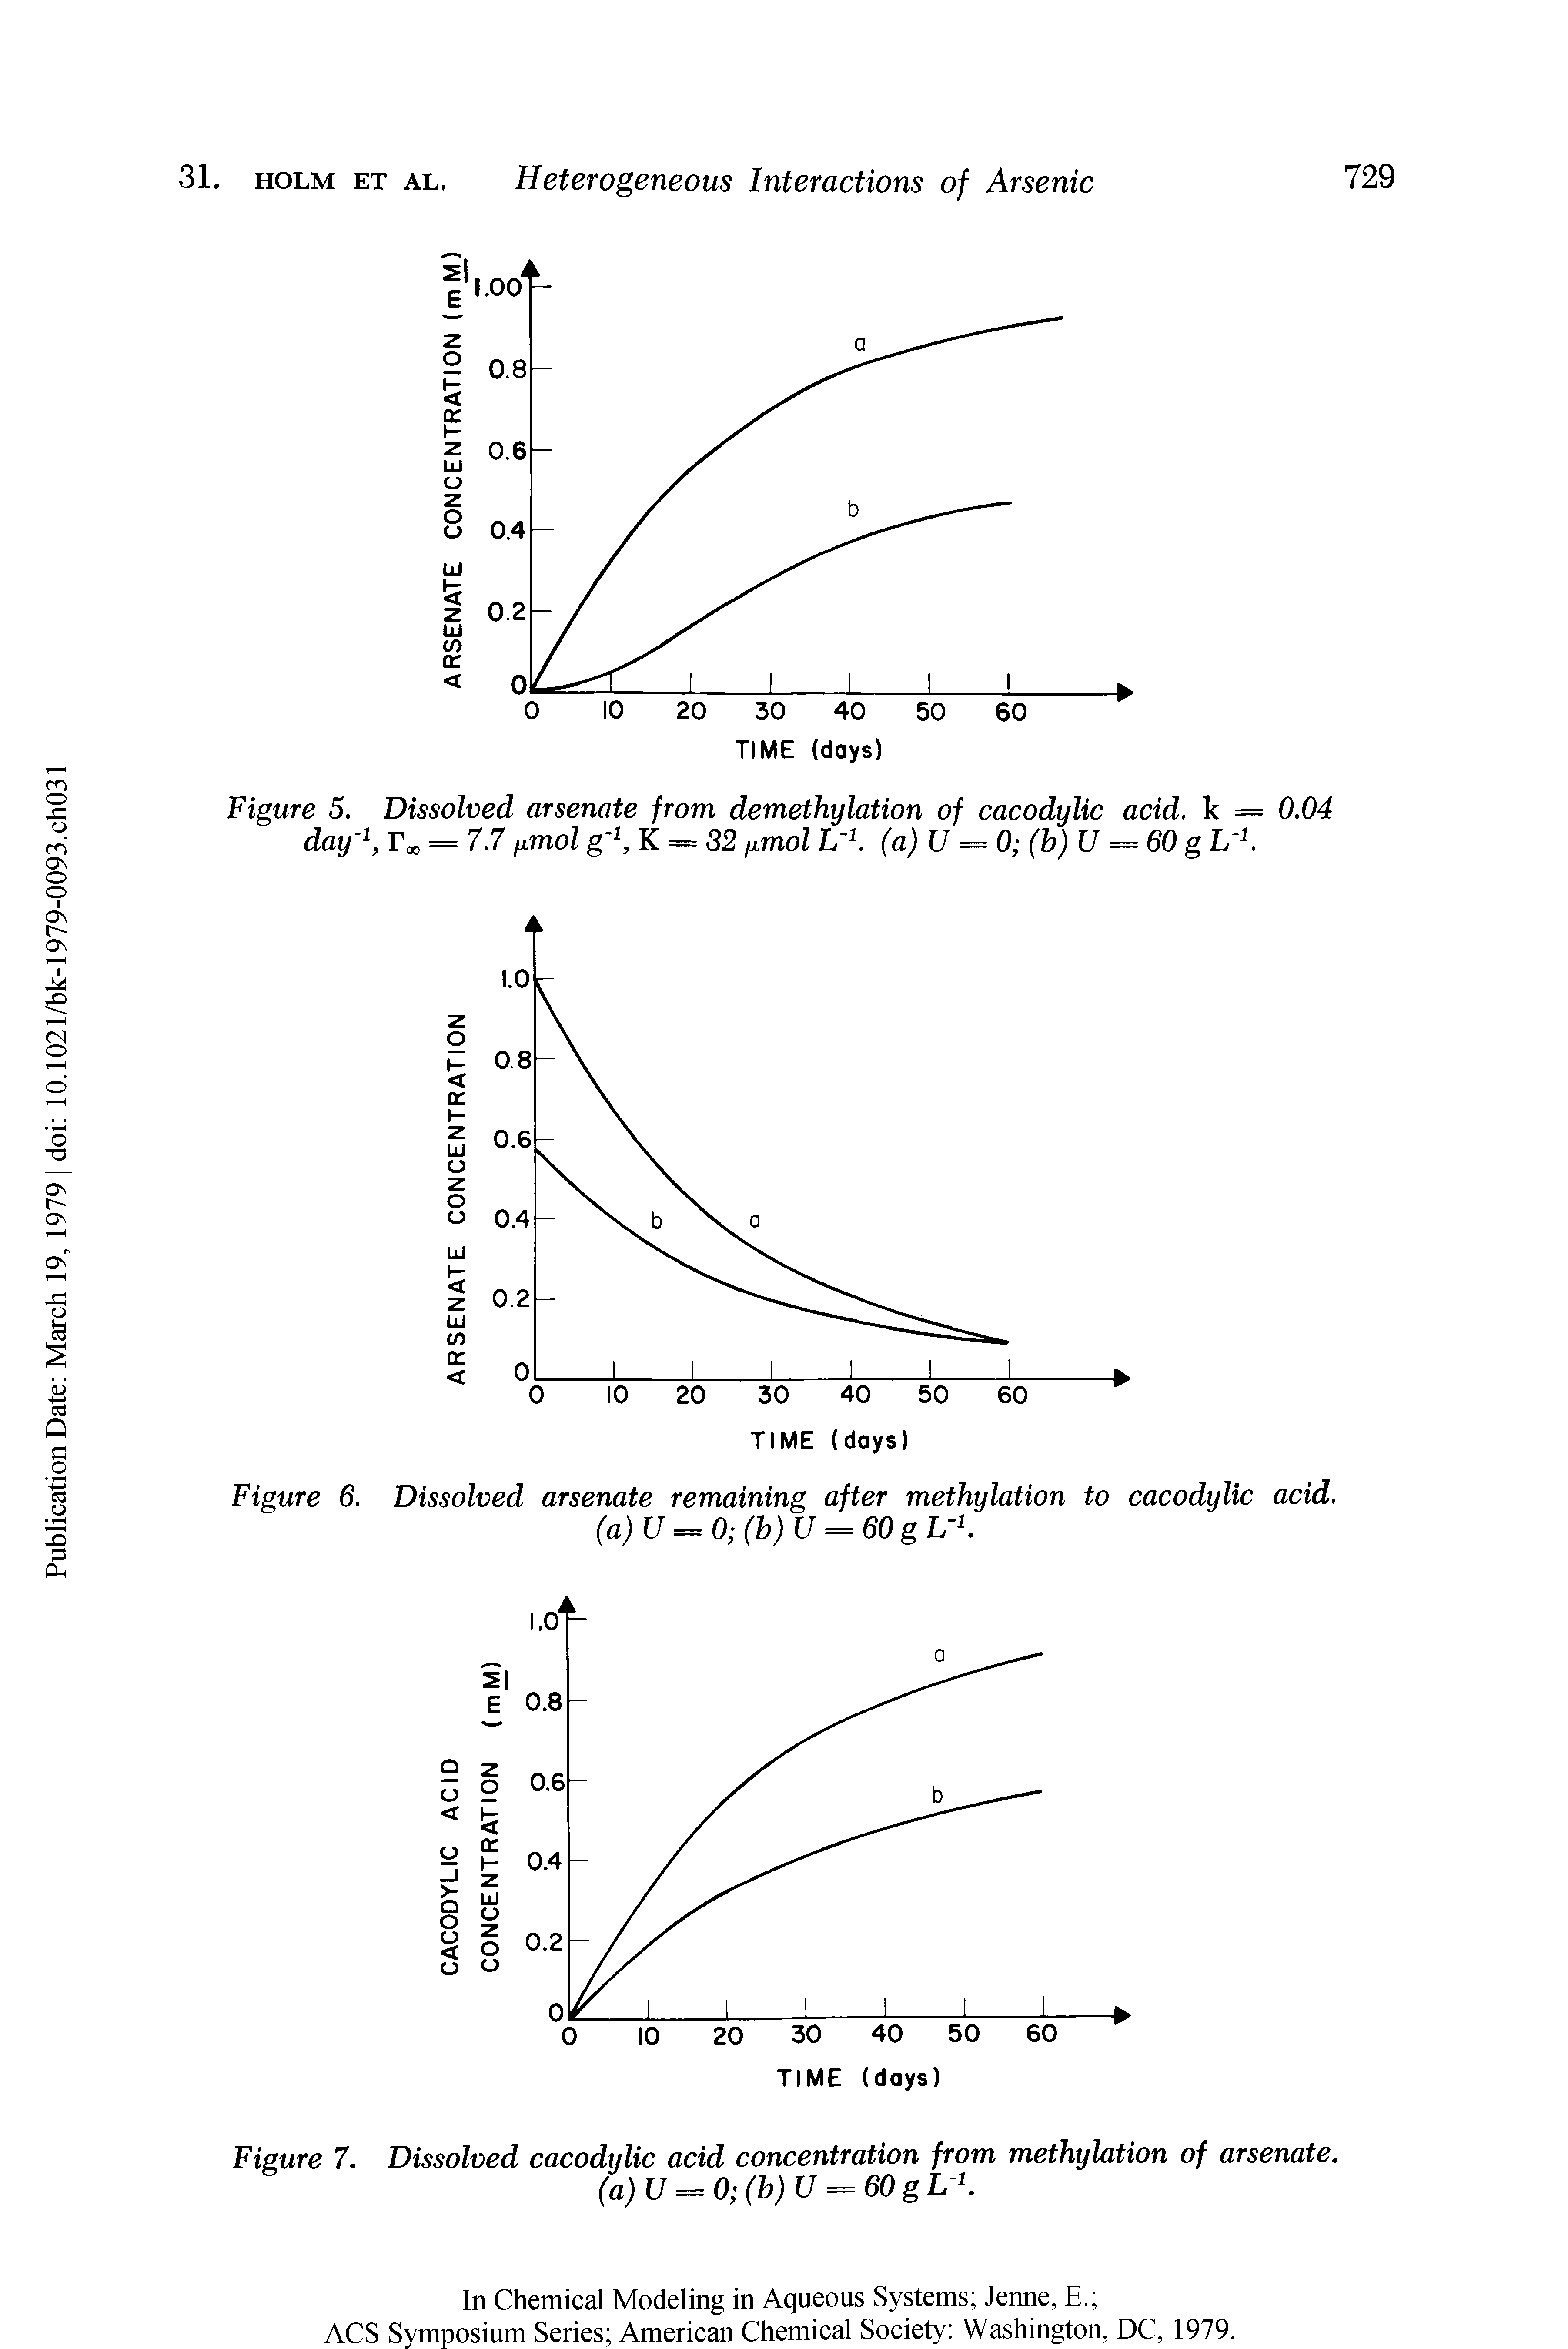 Figure 7. Dissolved cacodijlic acid concentration from methylation of arsenate, (a)U = 0 (b)U = 60gLK...